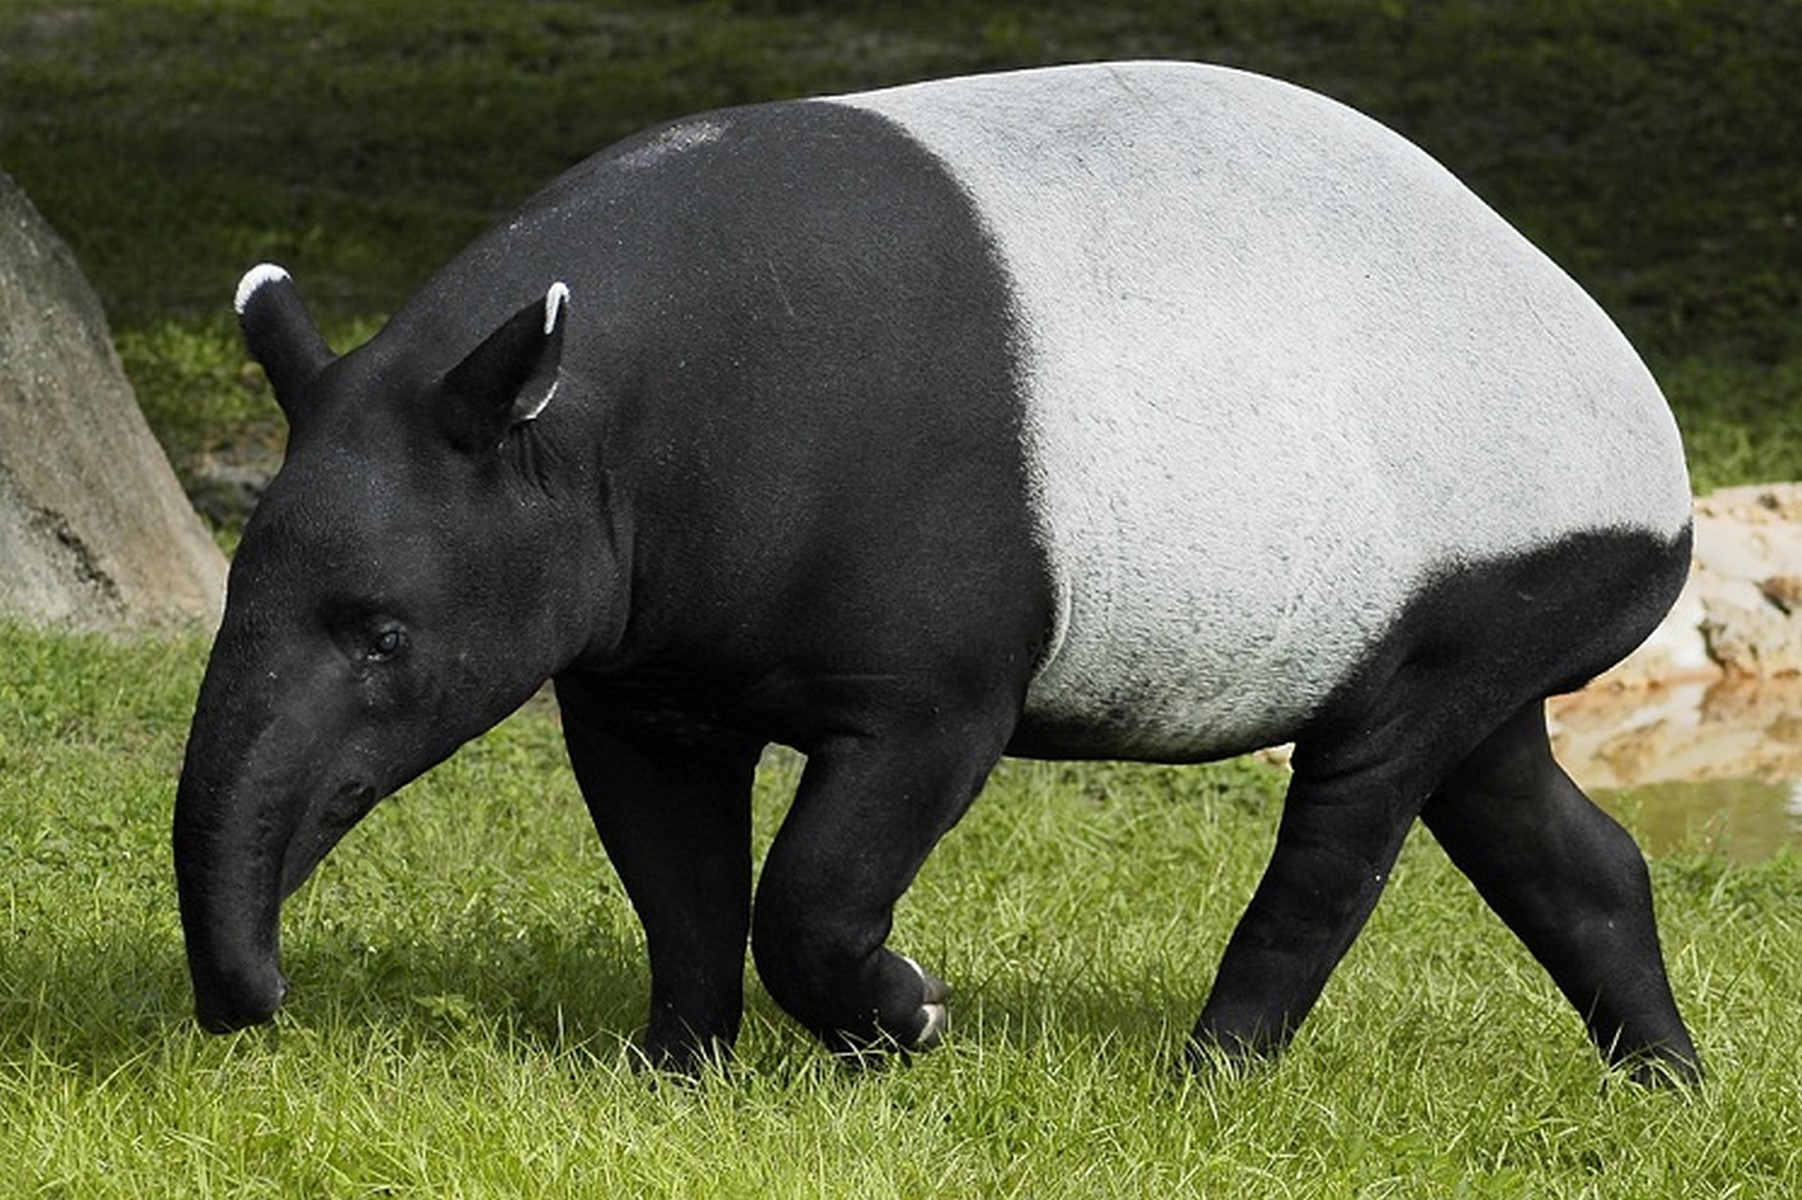 malayan tapir